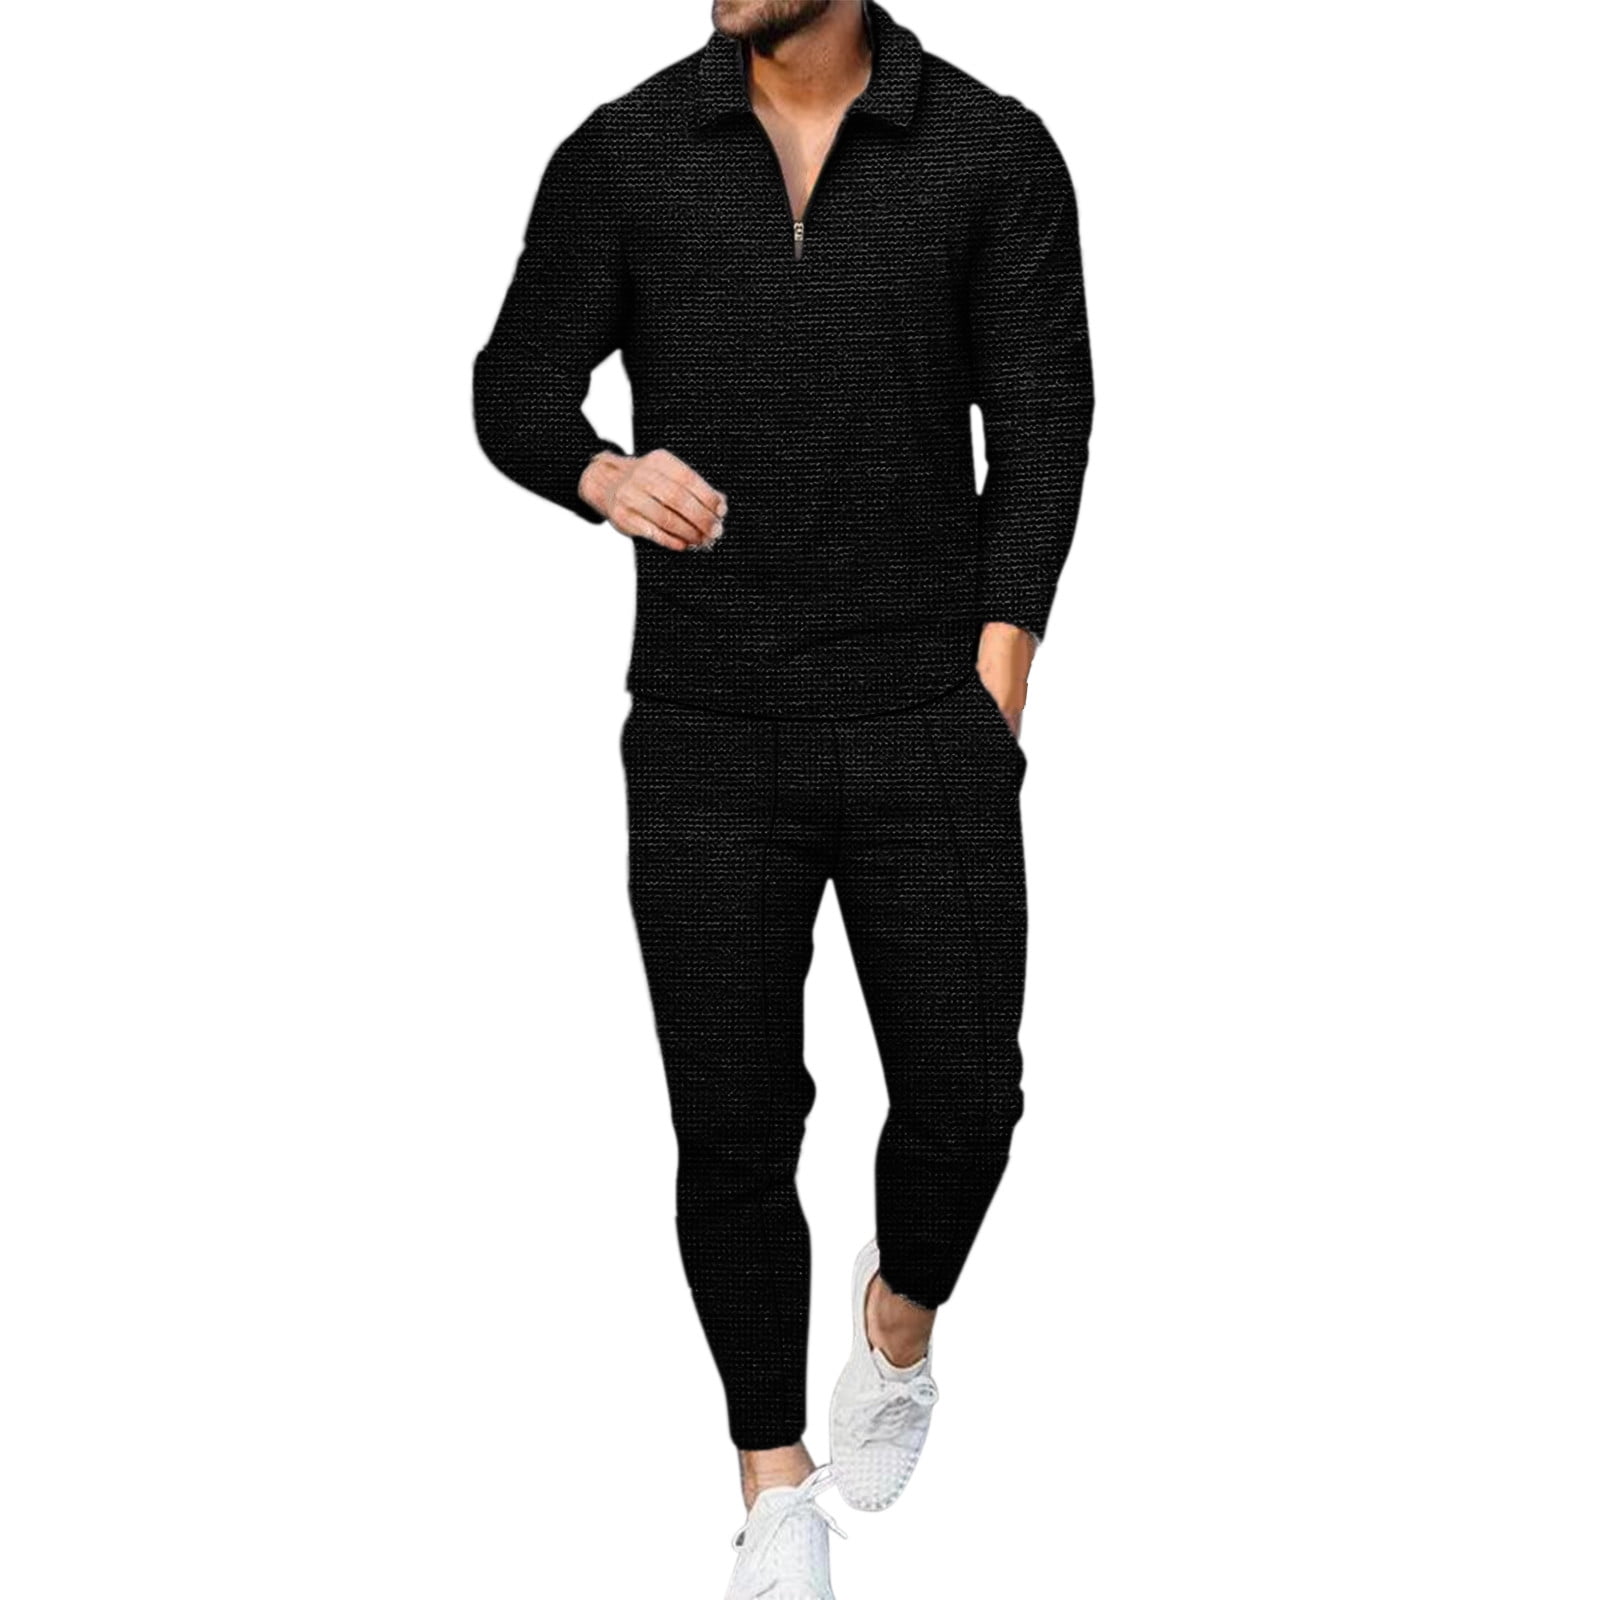 KaLI_store Suits for Men Fashion Men's Tracksuit 2 Piece Half-Zip Polo  Sweatsuits for Mens Casual Running Jogging Sport Suit Sets Grey,M 